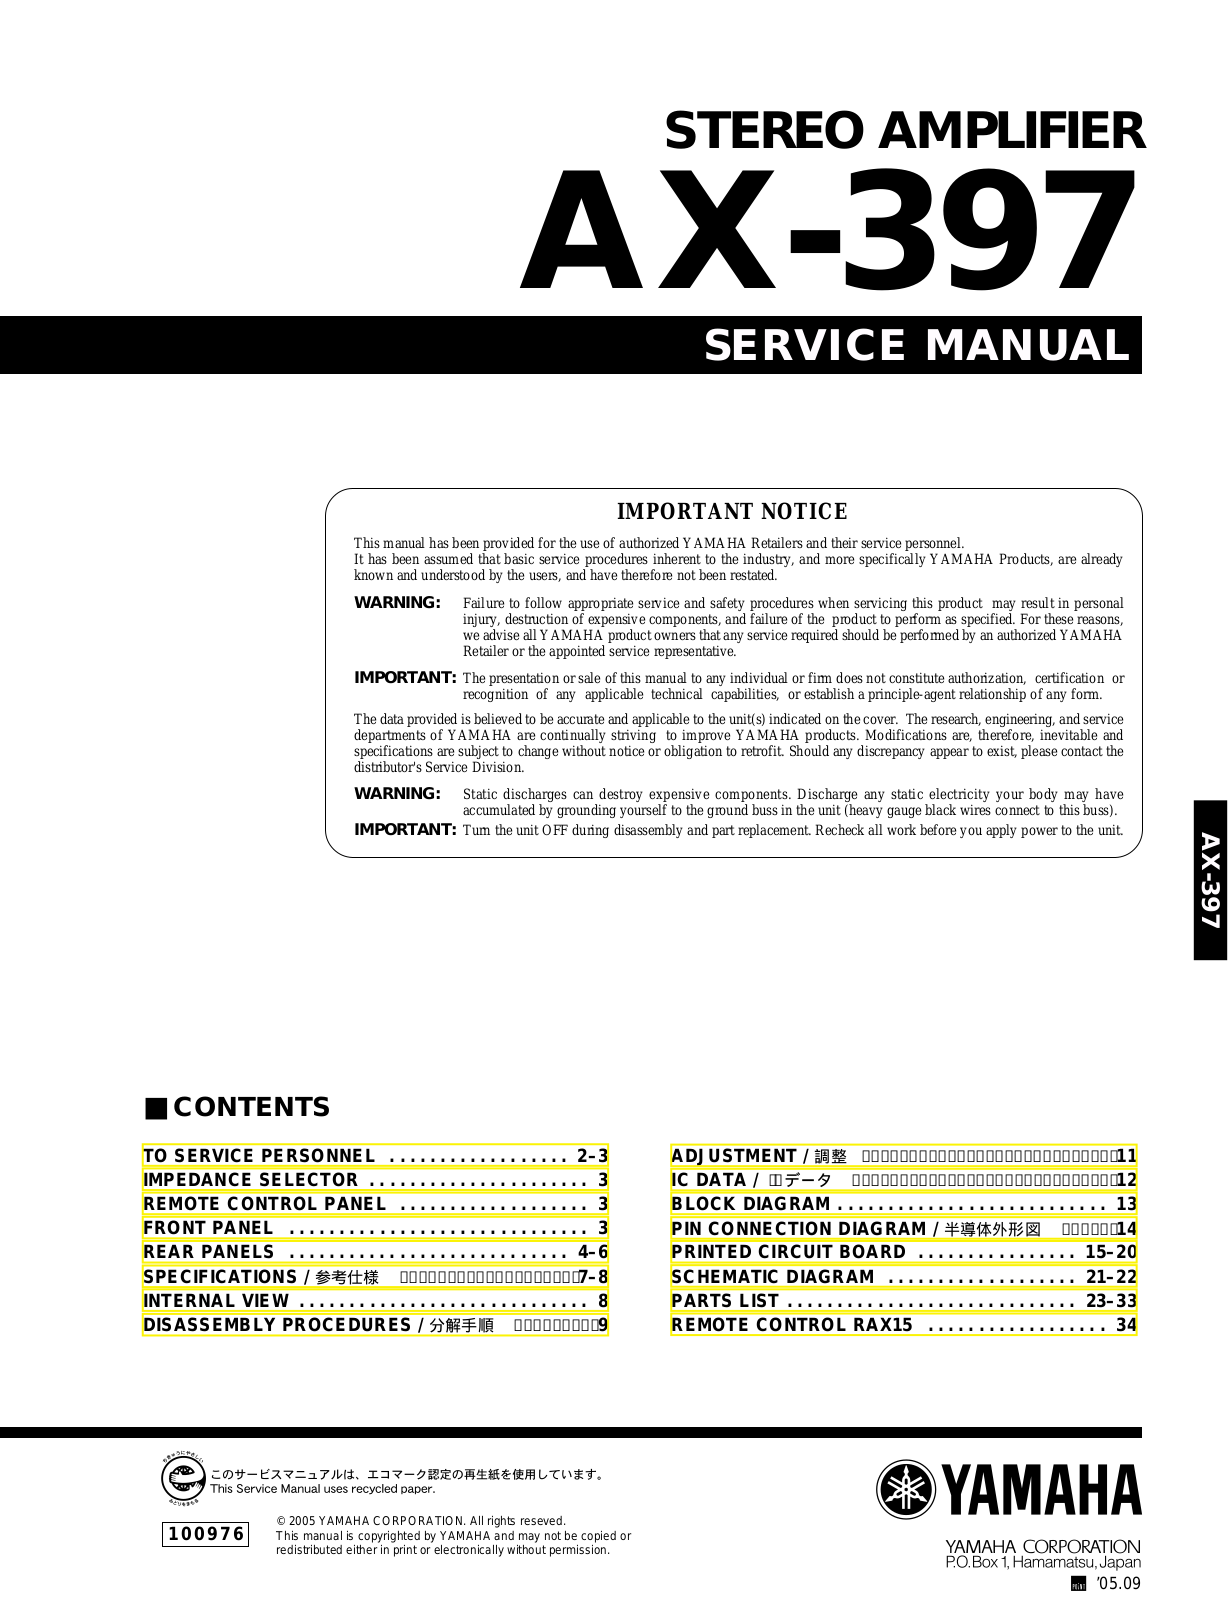 Yamaha AX-397 Service Manual